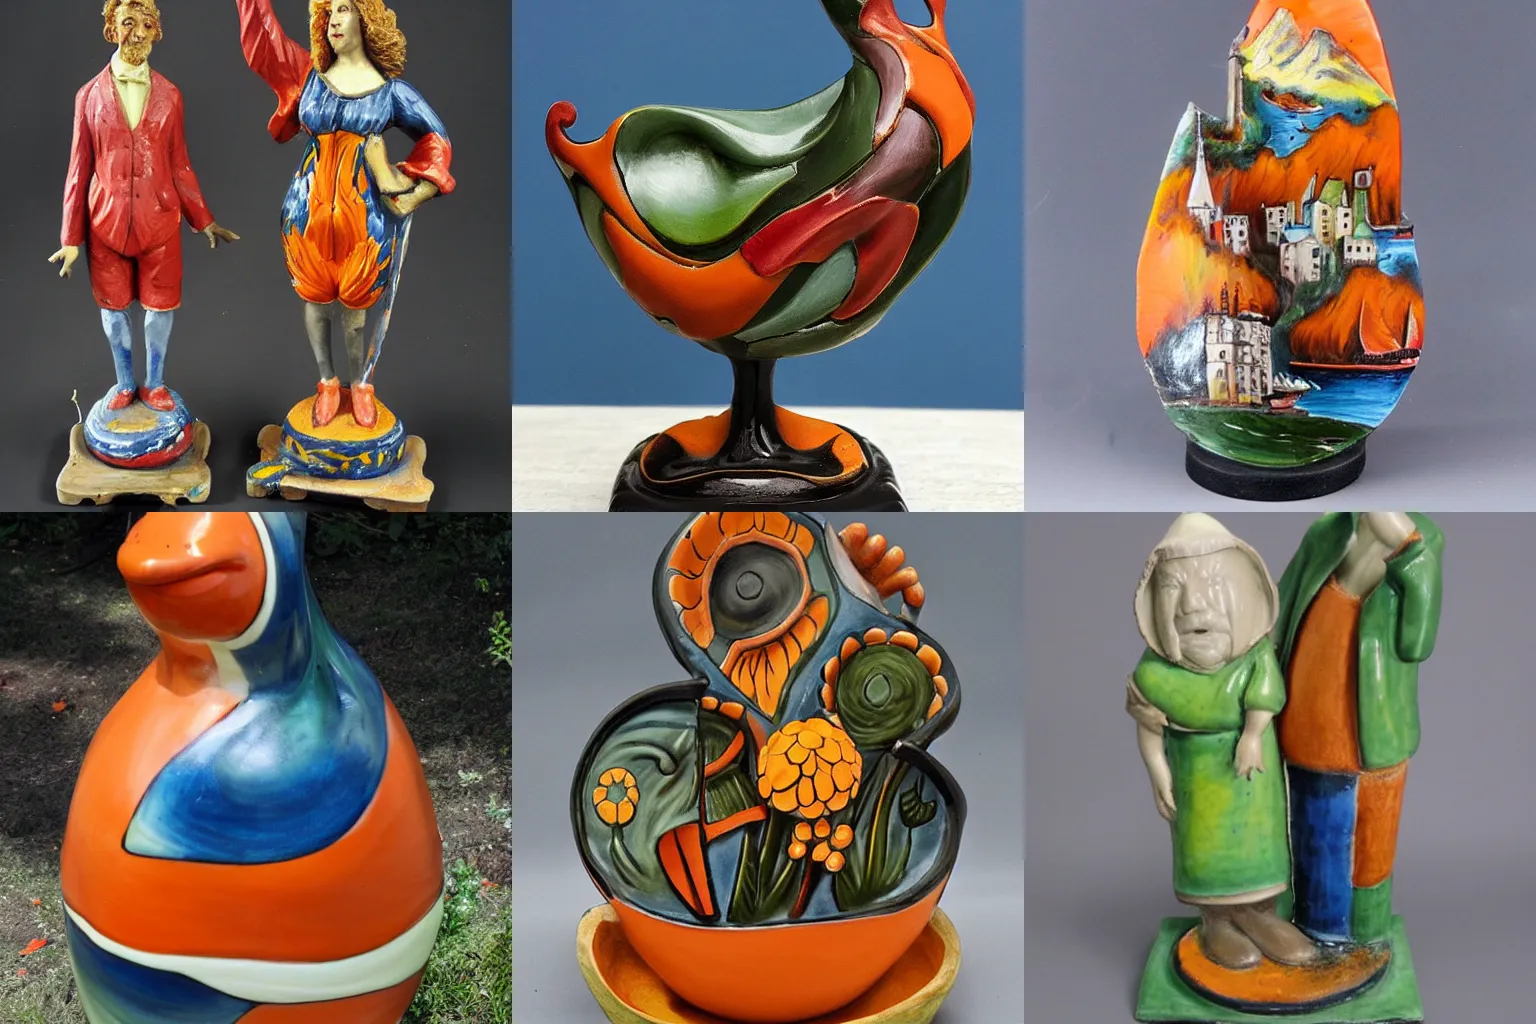 Prompt: netherland painted ceramic sculpture